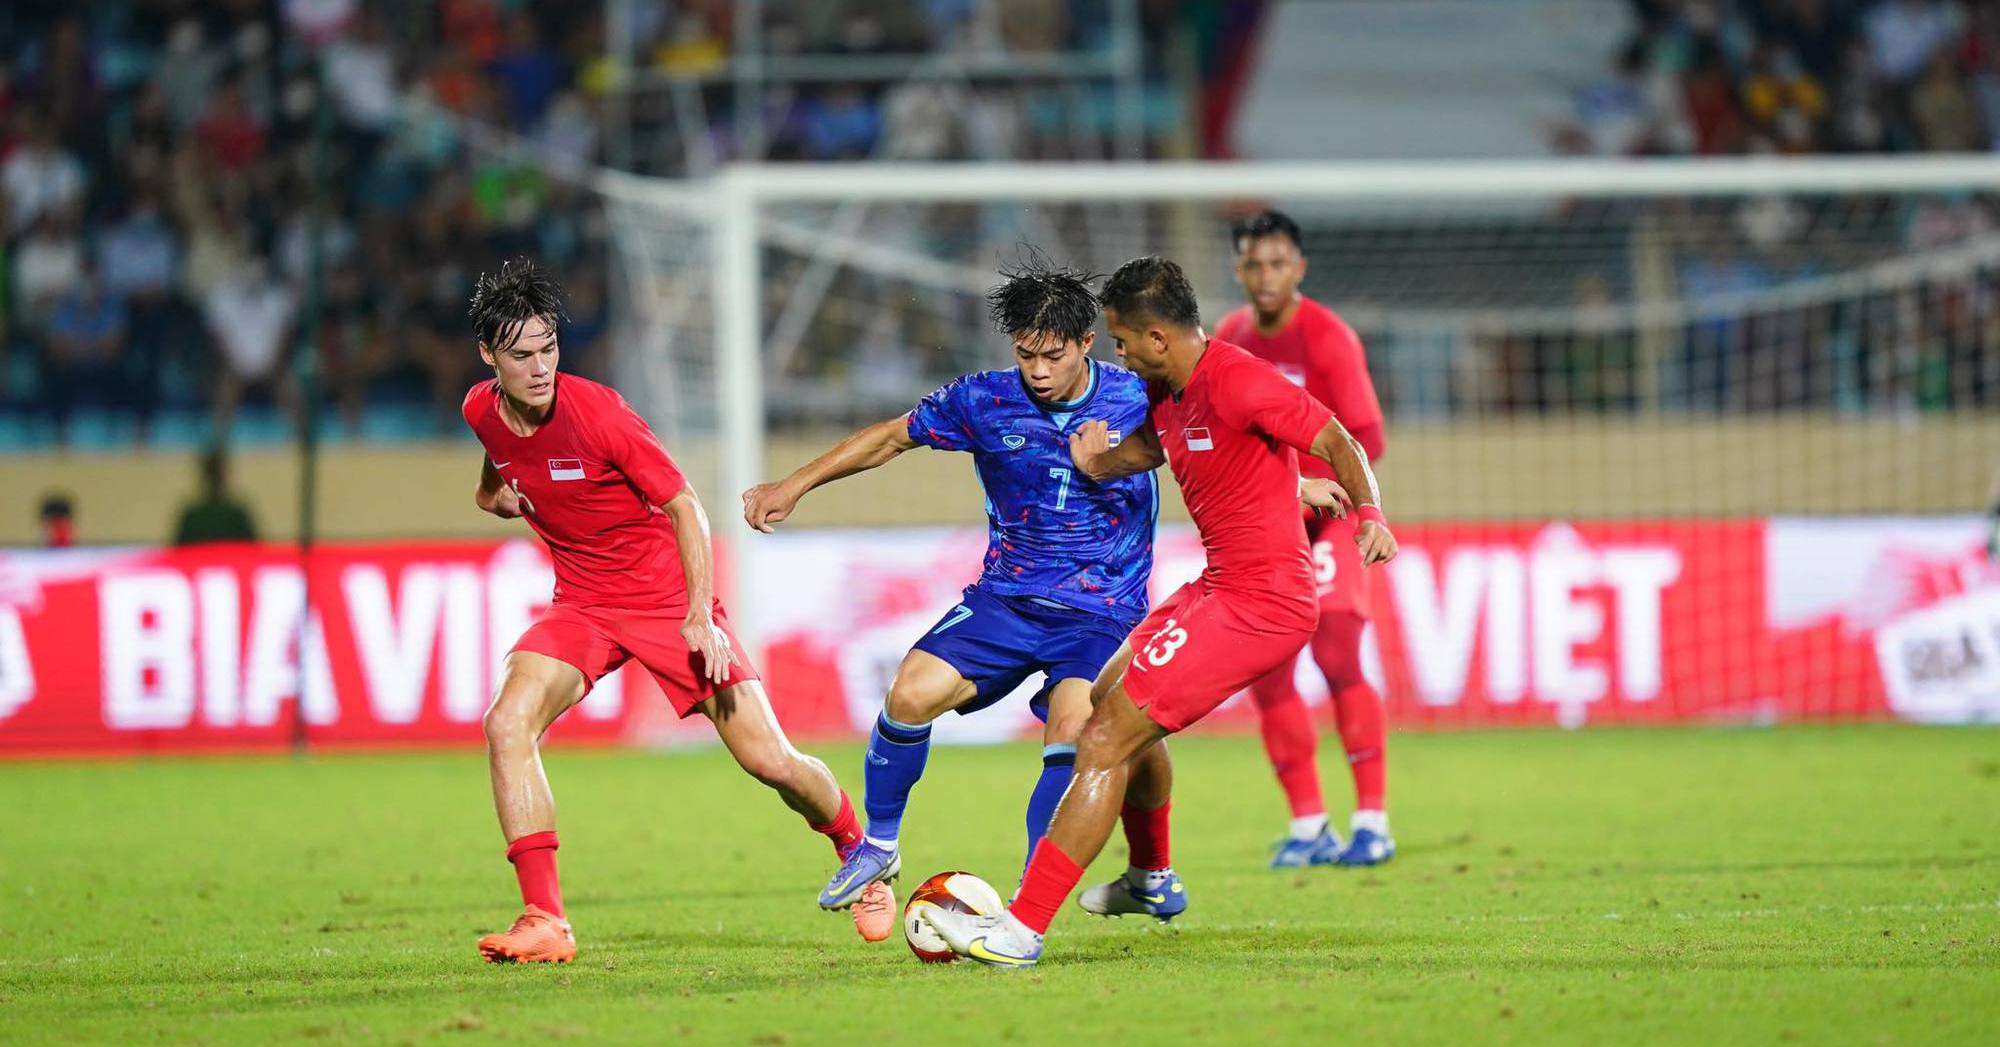 U23 Thailand “off the wing” what must U23 Vietnam avoid?